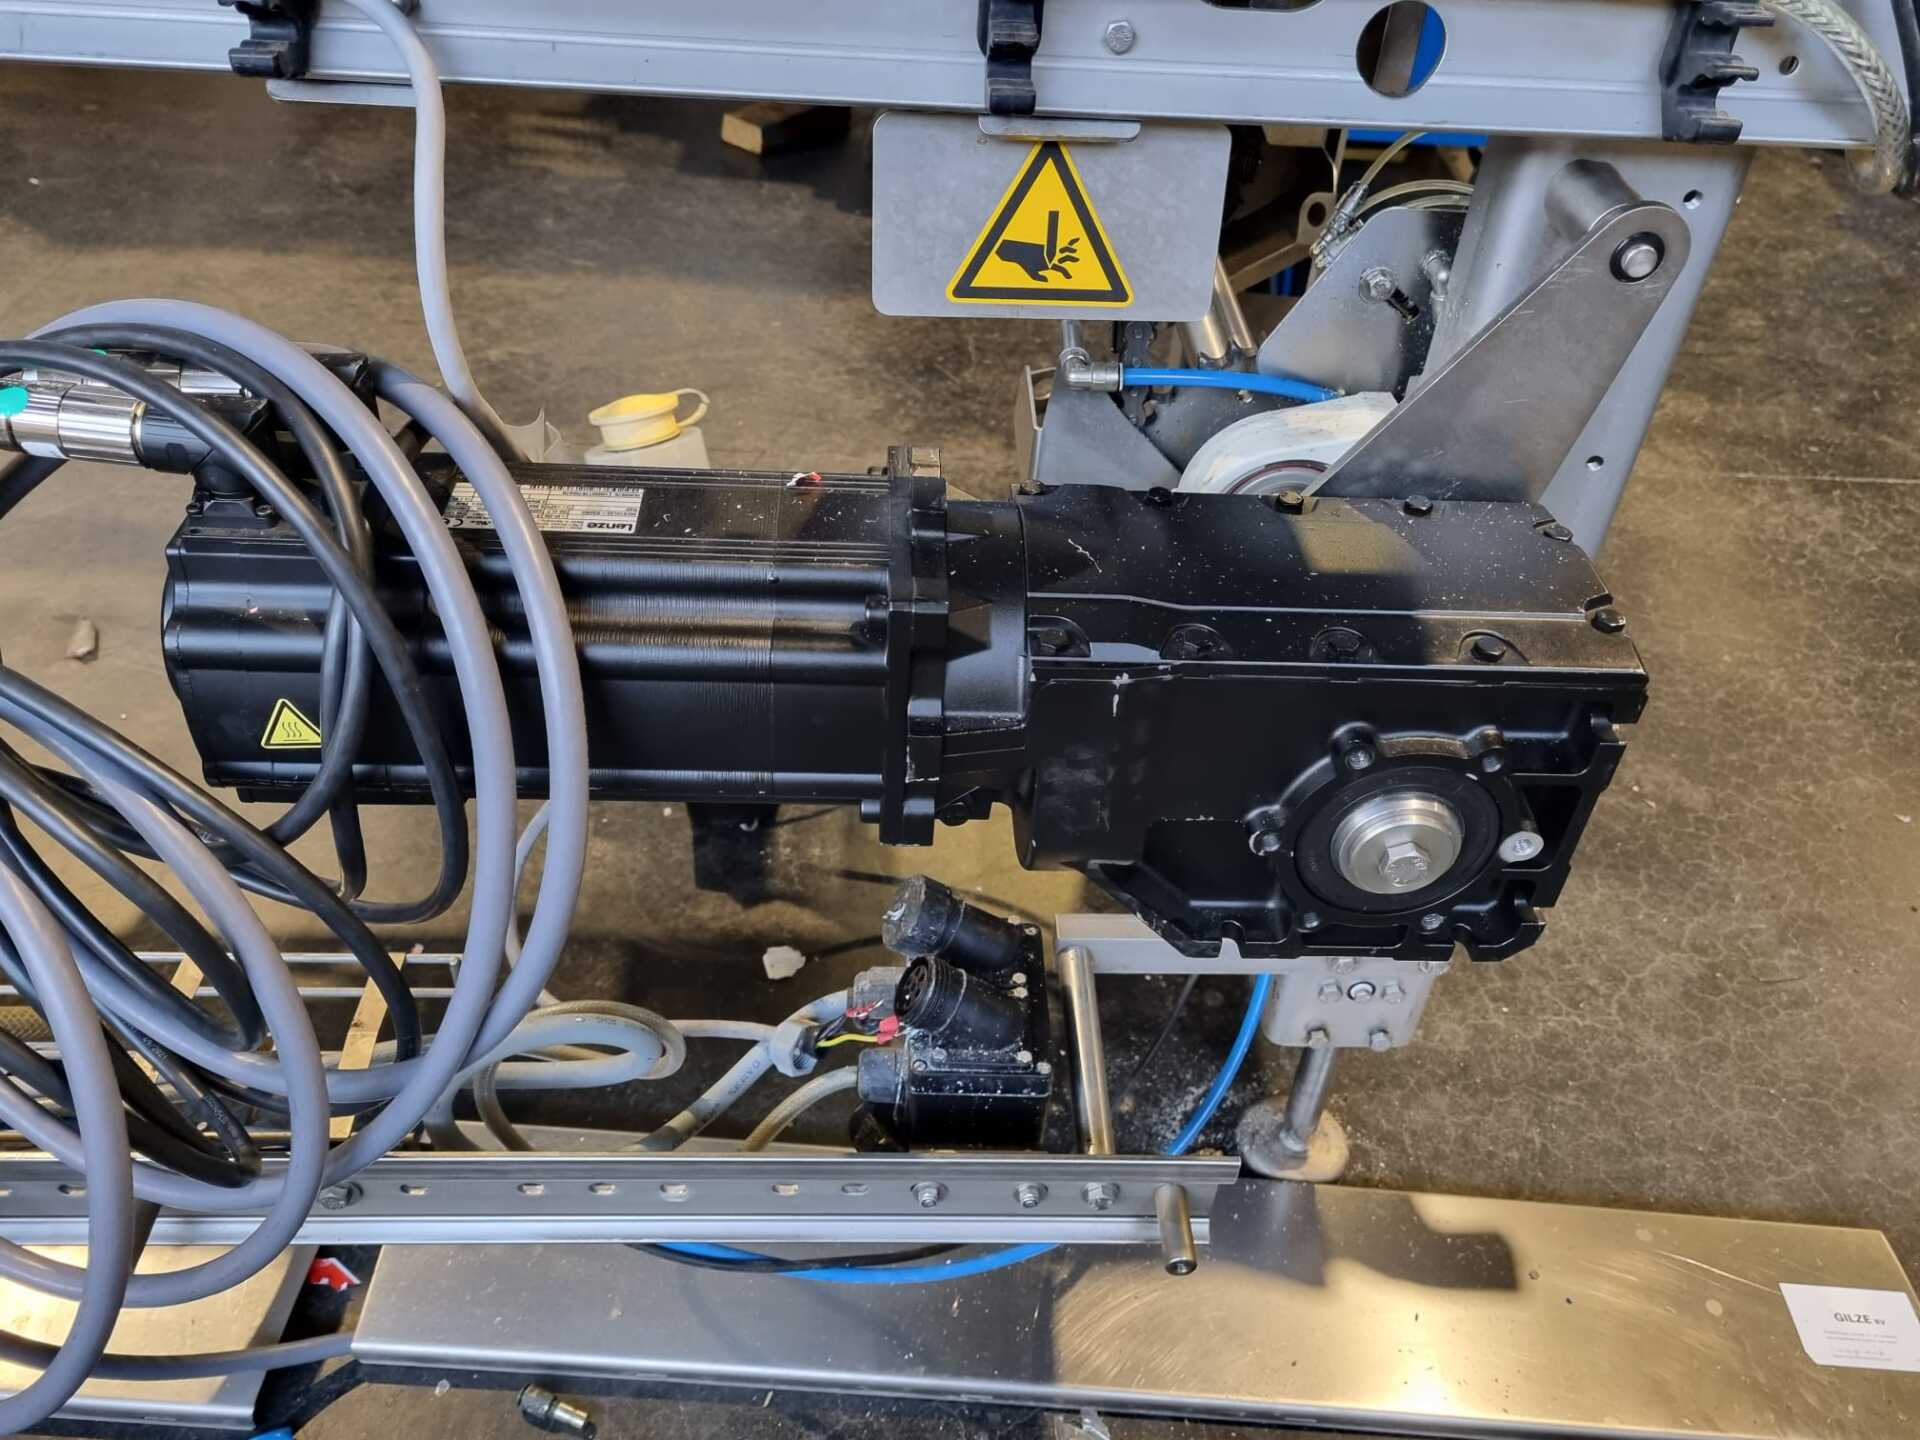 Tiefziehmachine
Service
Reparatur
Multivac
Motor